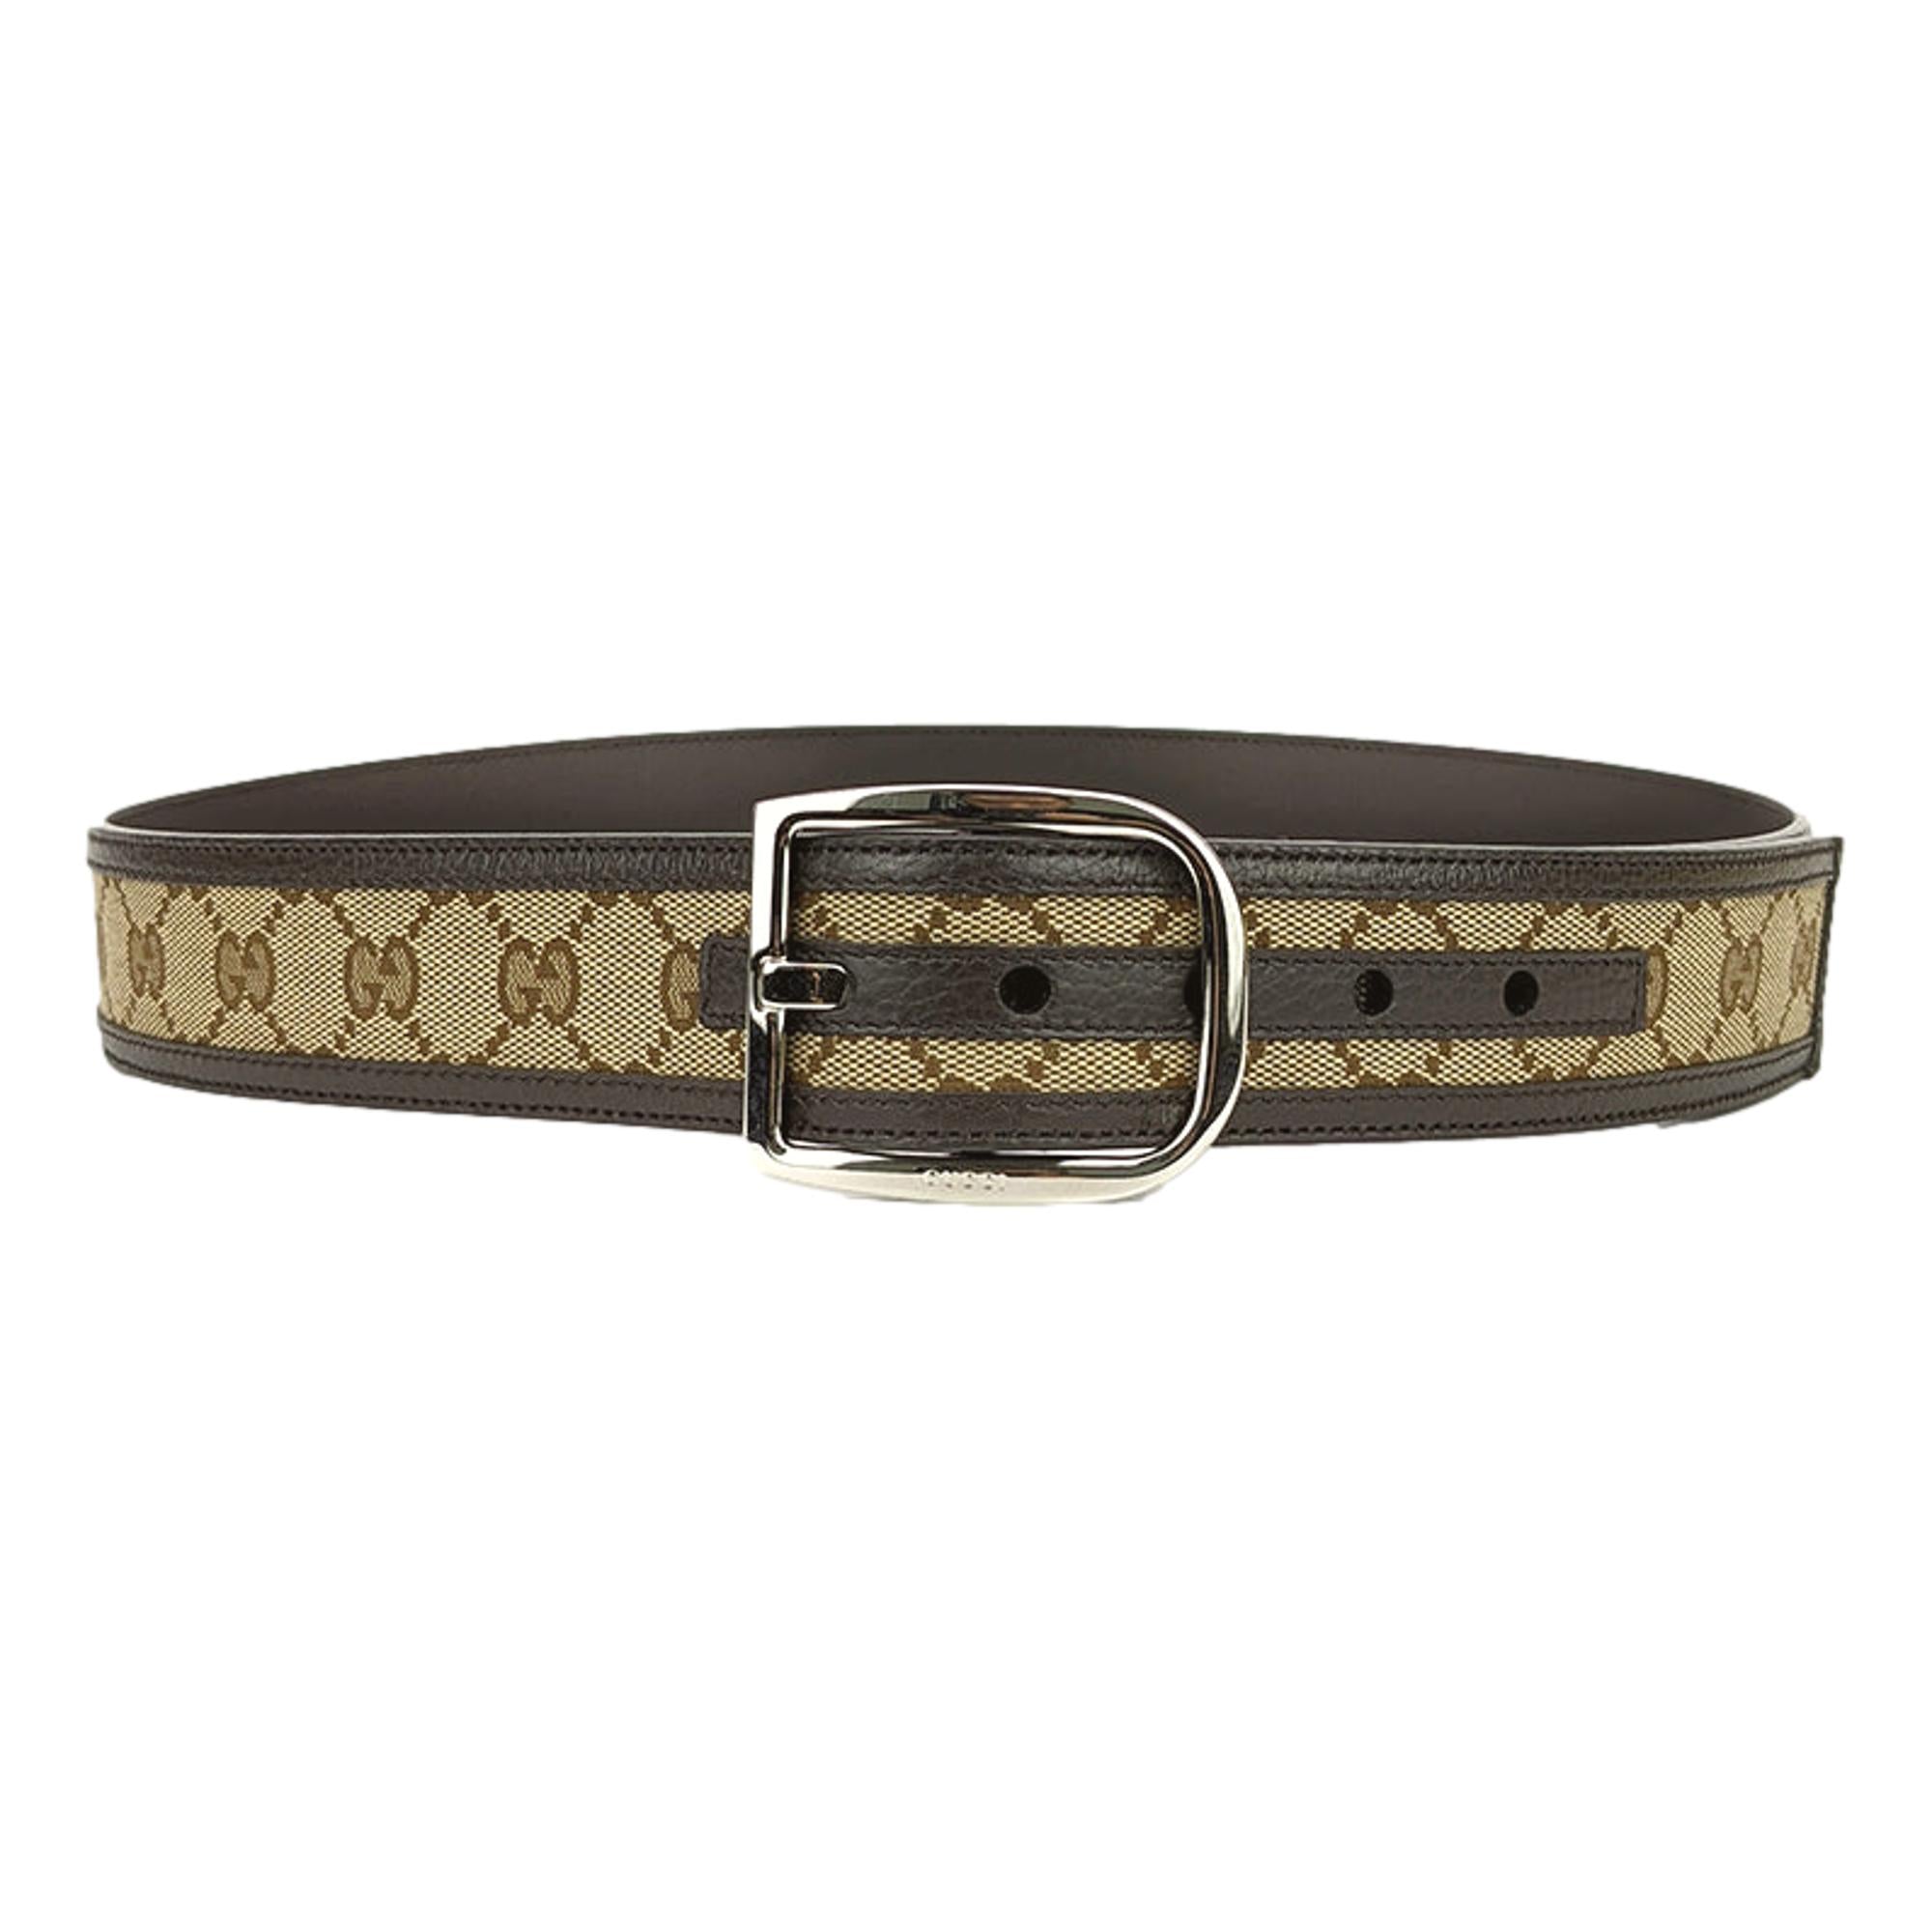 Gucci Guccisssima Brown and Beige Canvas Leather Trim Belt Size 100/40